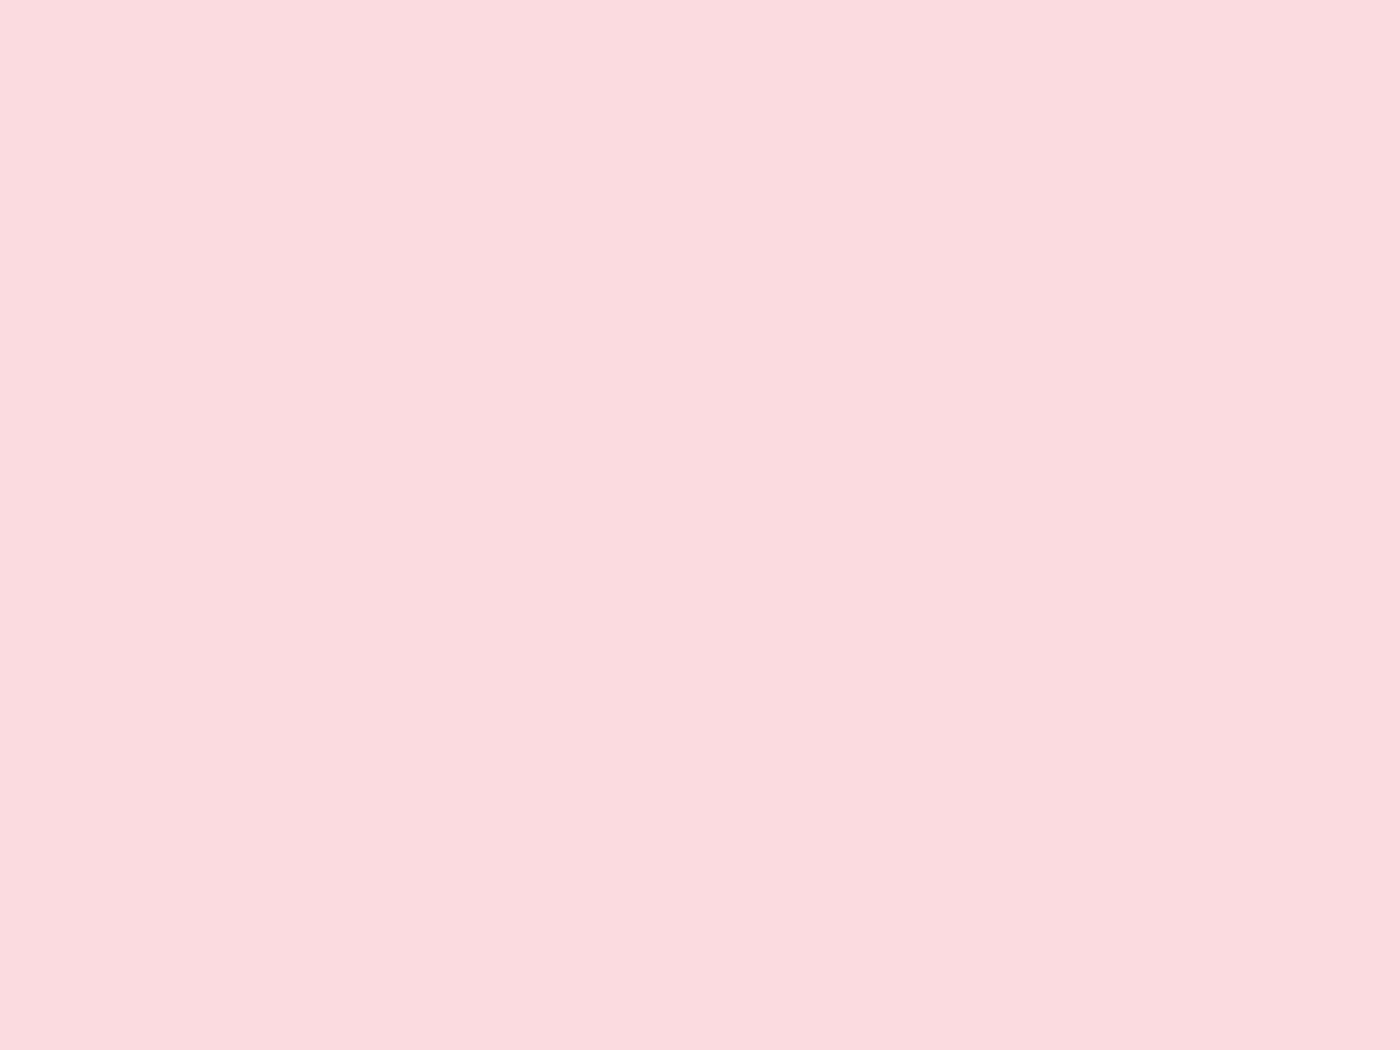 Caption: Serene Pink Ombre Background